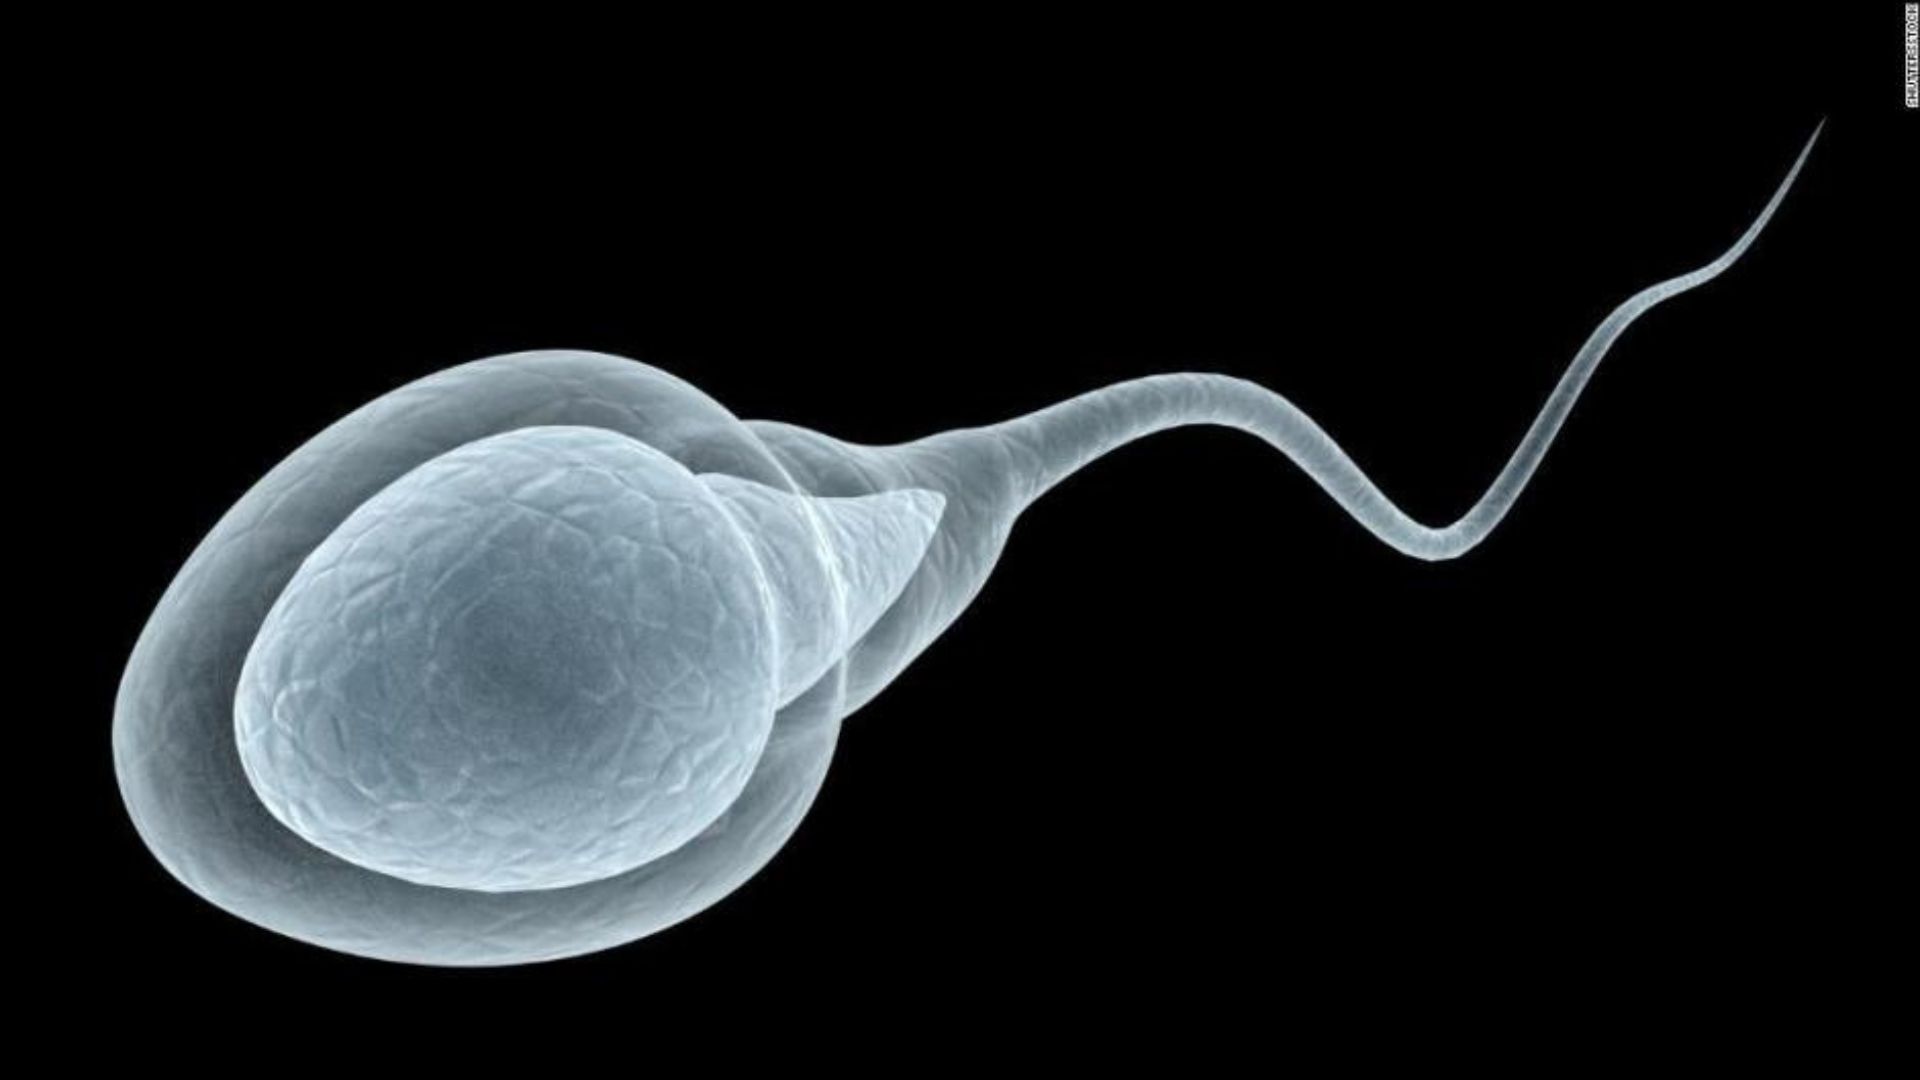 los-espermatozoides-no-se-mueven-como-hemos-cre-do-durante-siglos